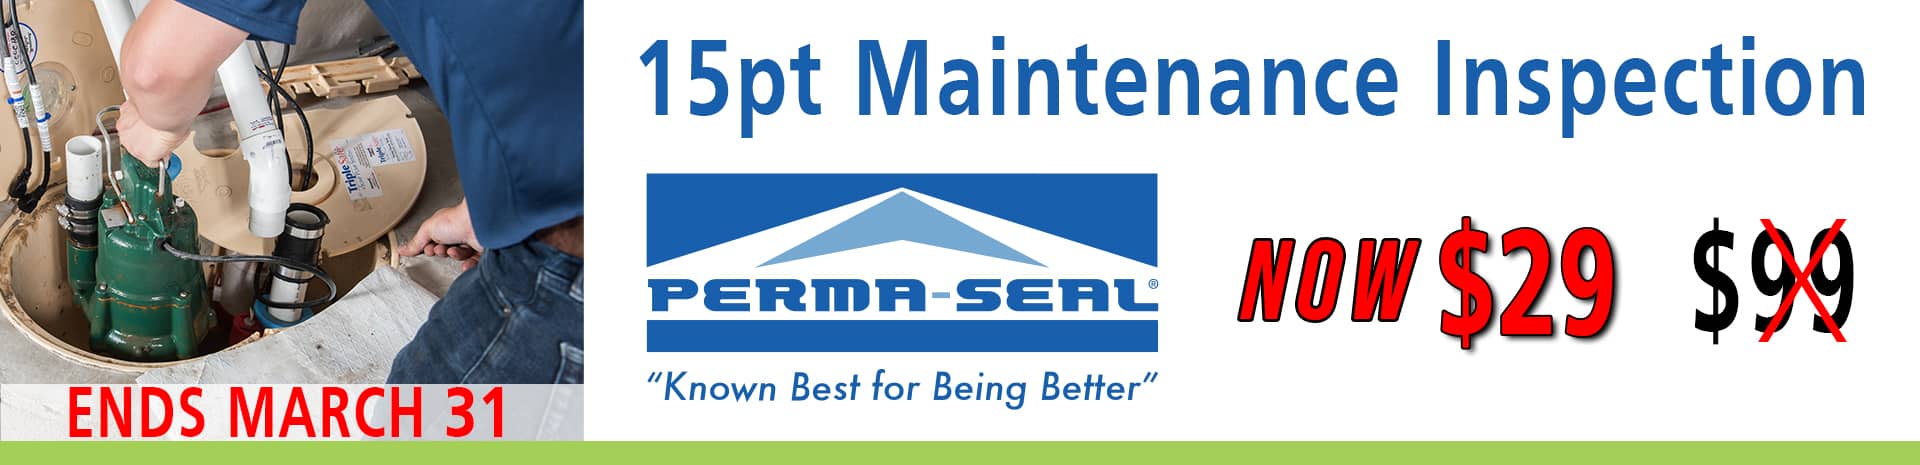 Perma-Seal Preventive Maintenance Special Chicago